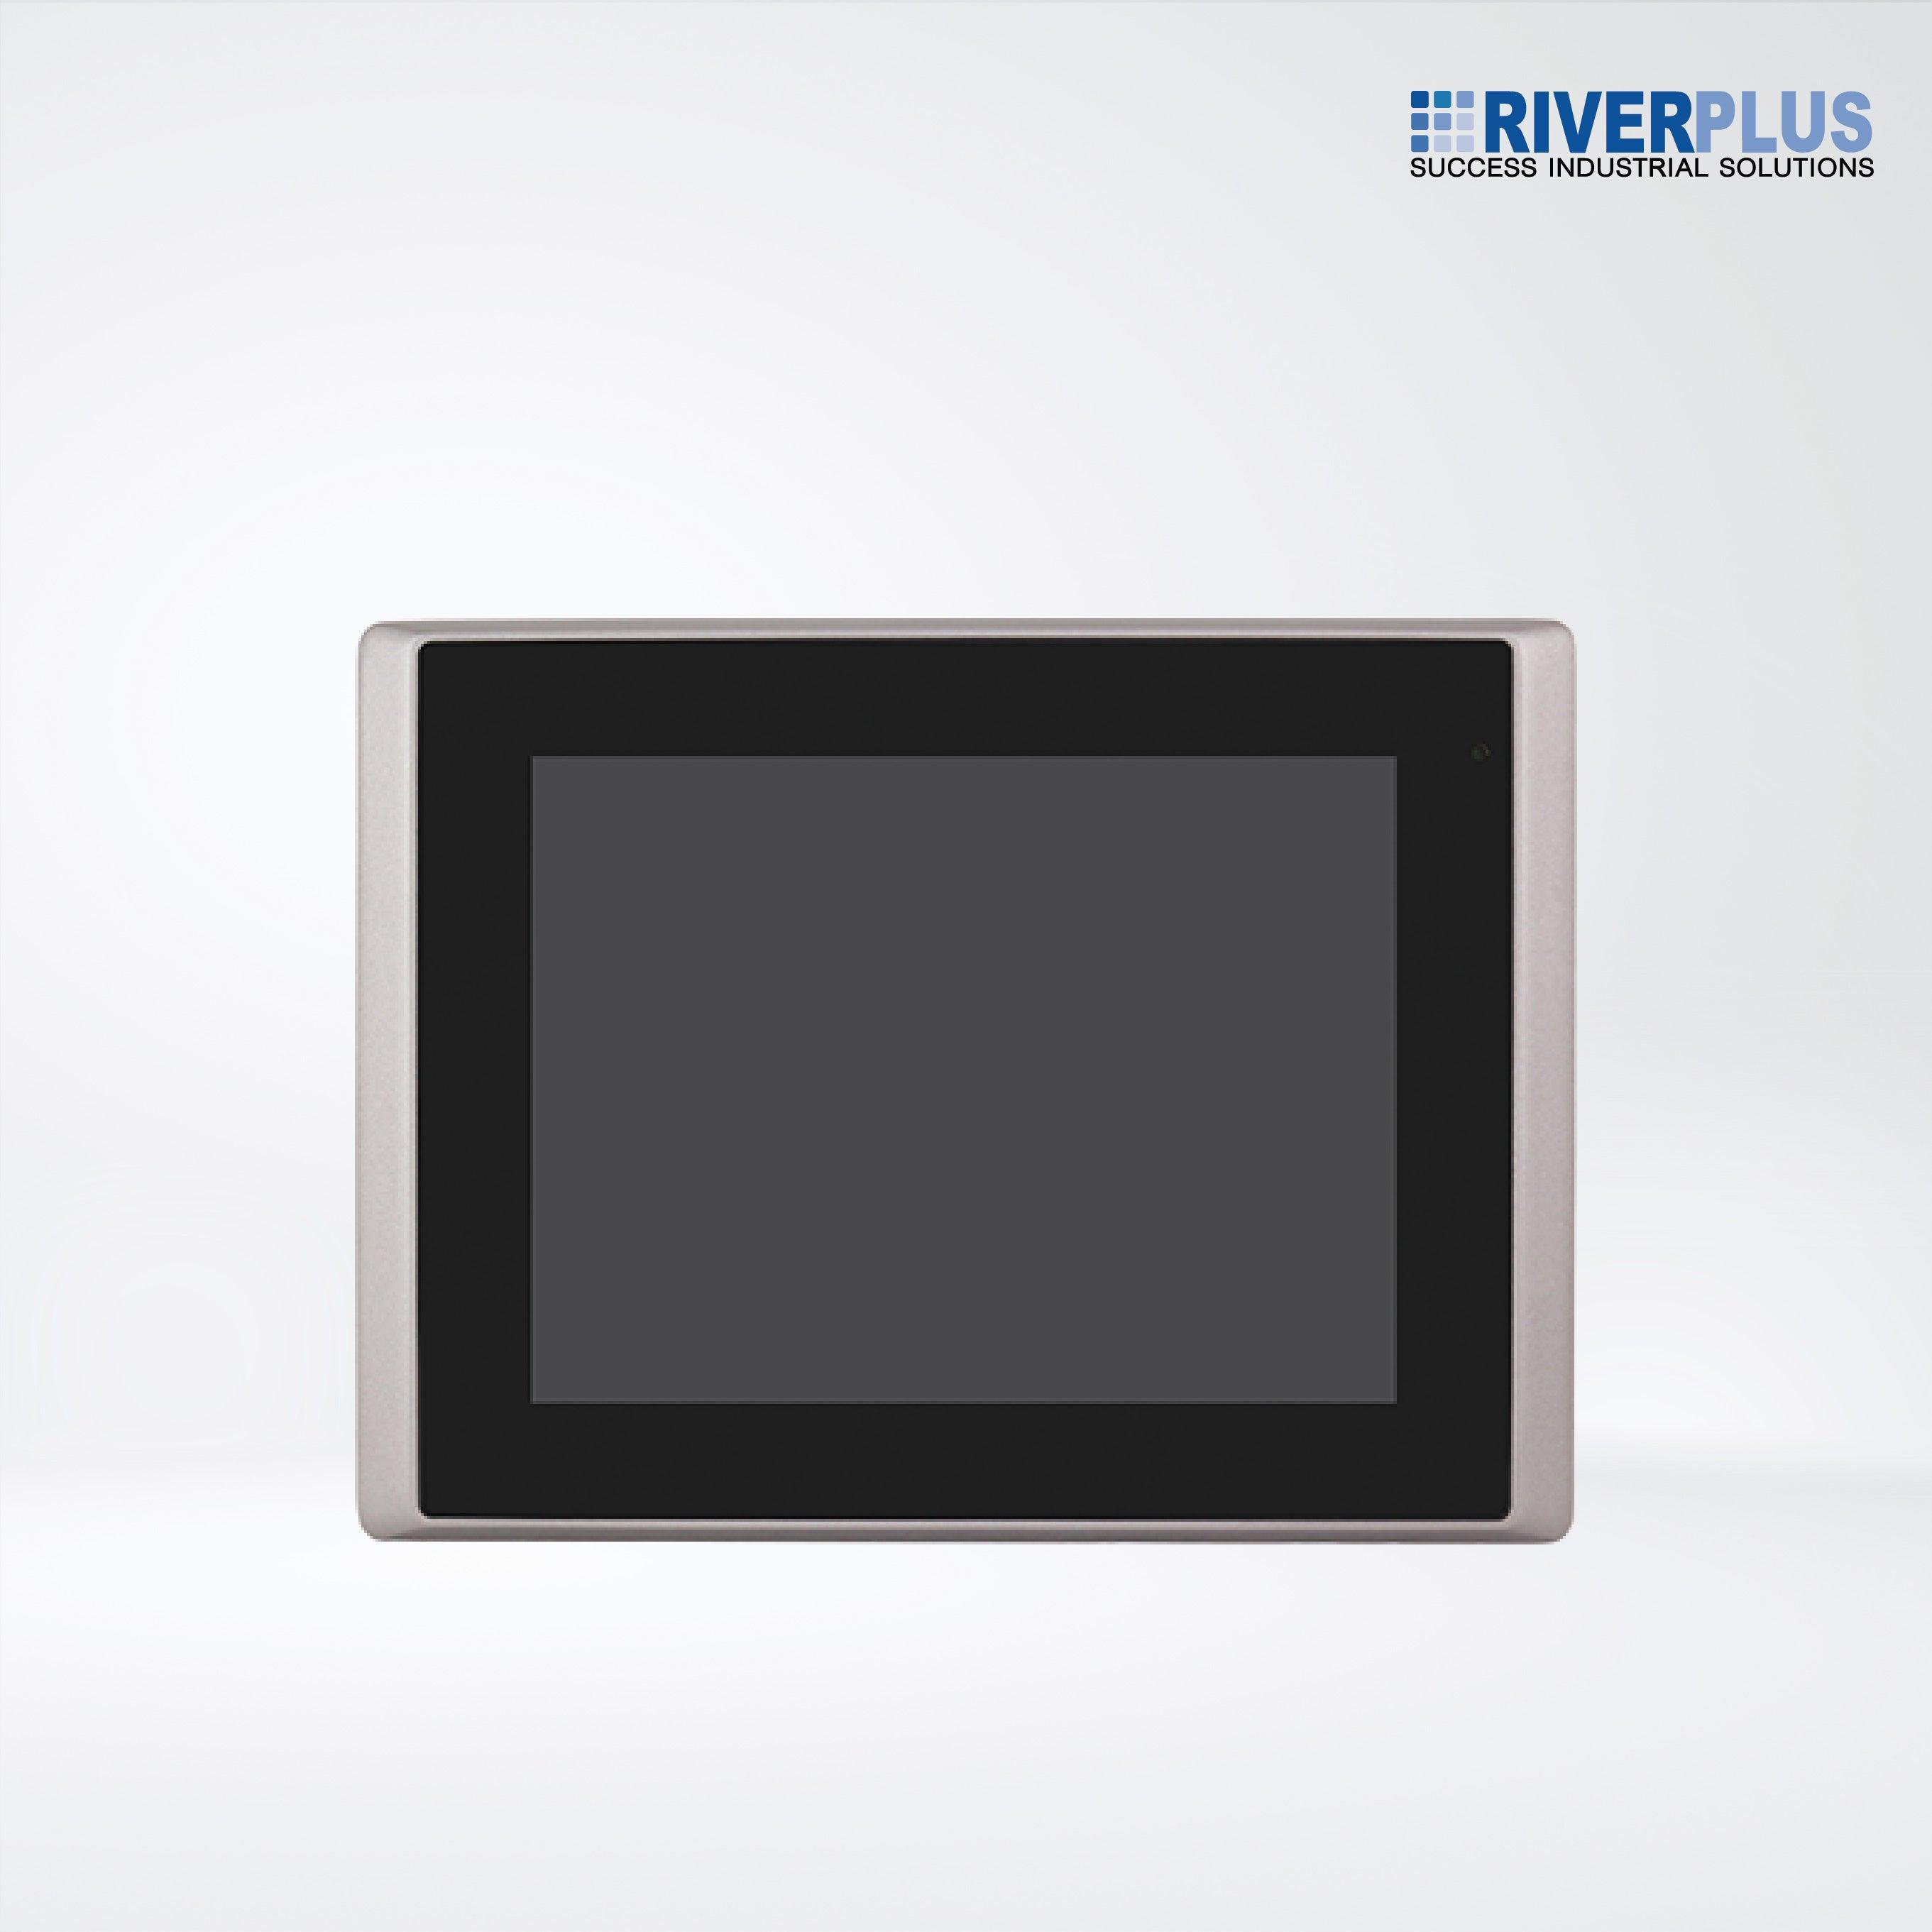 ARCHMI-808 8" Intel Celeron N2930/ Atom E3845, Fanless Industrial Compact Size Panel PC - Riverplus